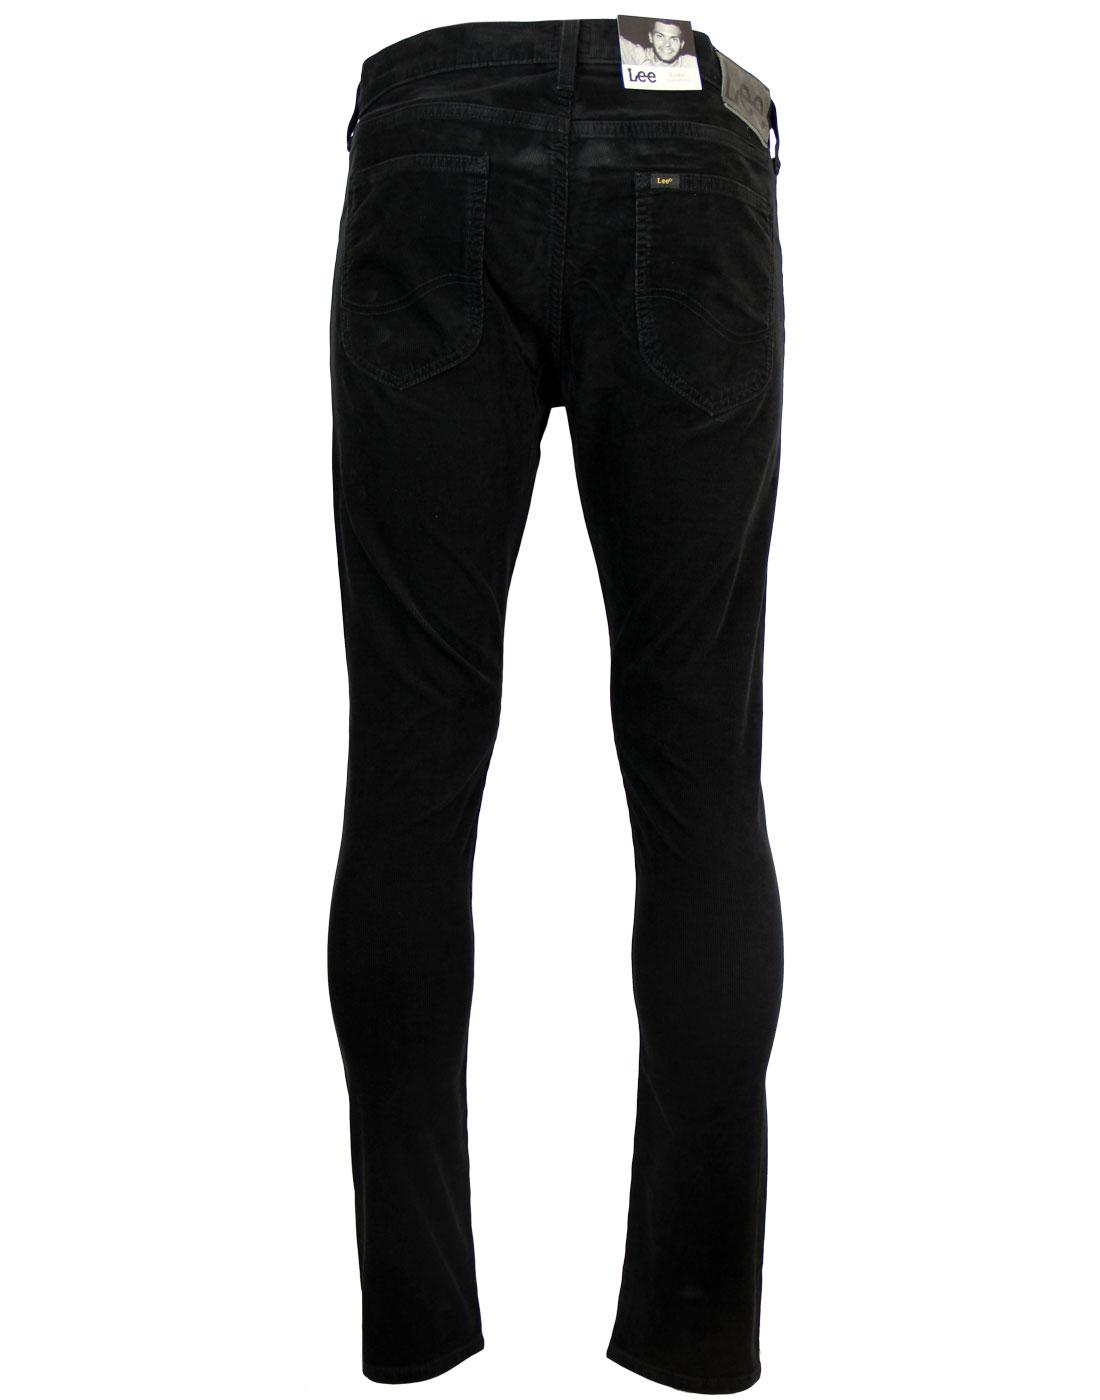 LEE JEANS Luke Retro Indie Mod Slim Tapered Fit Cord Jeans Black